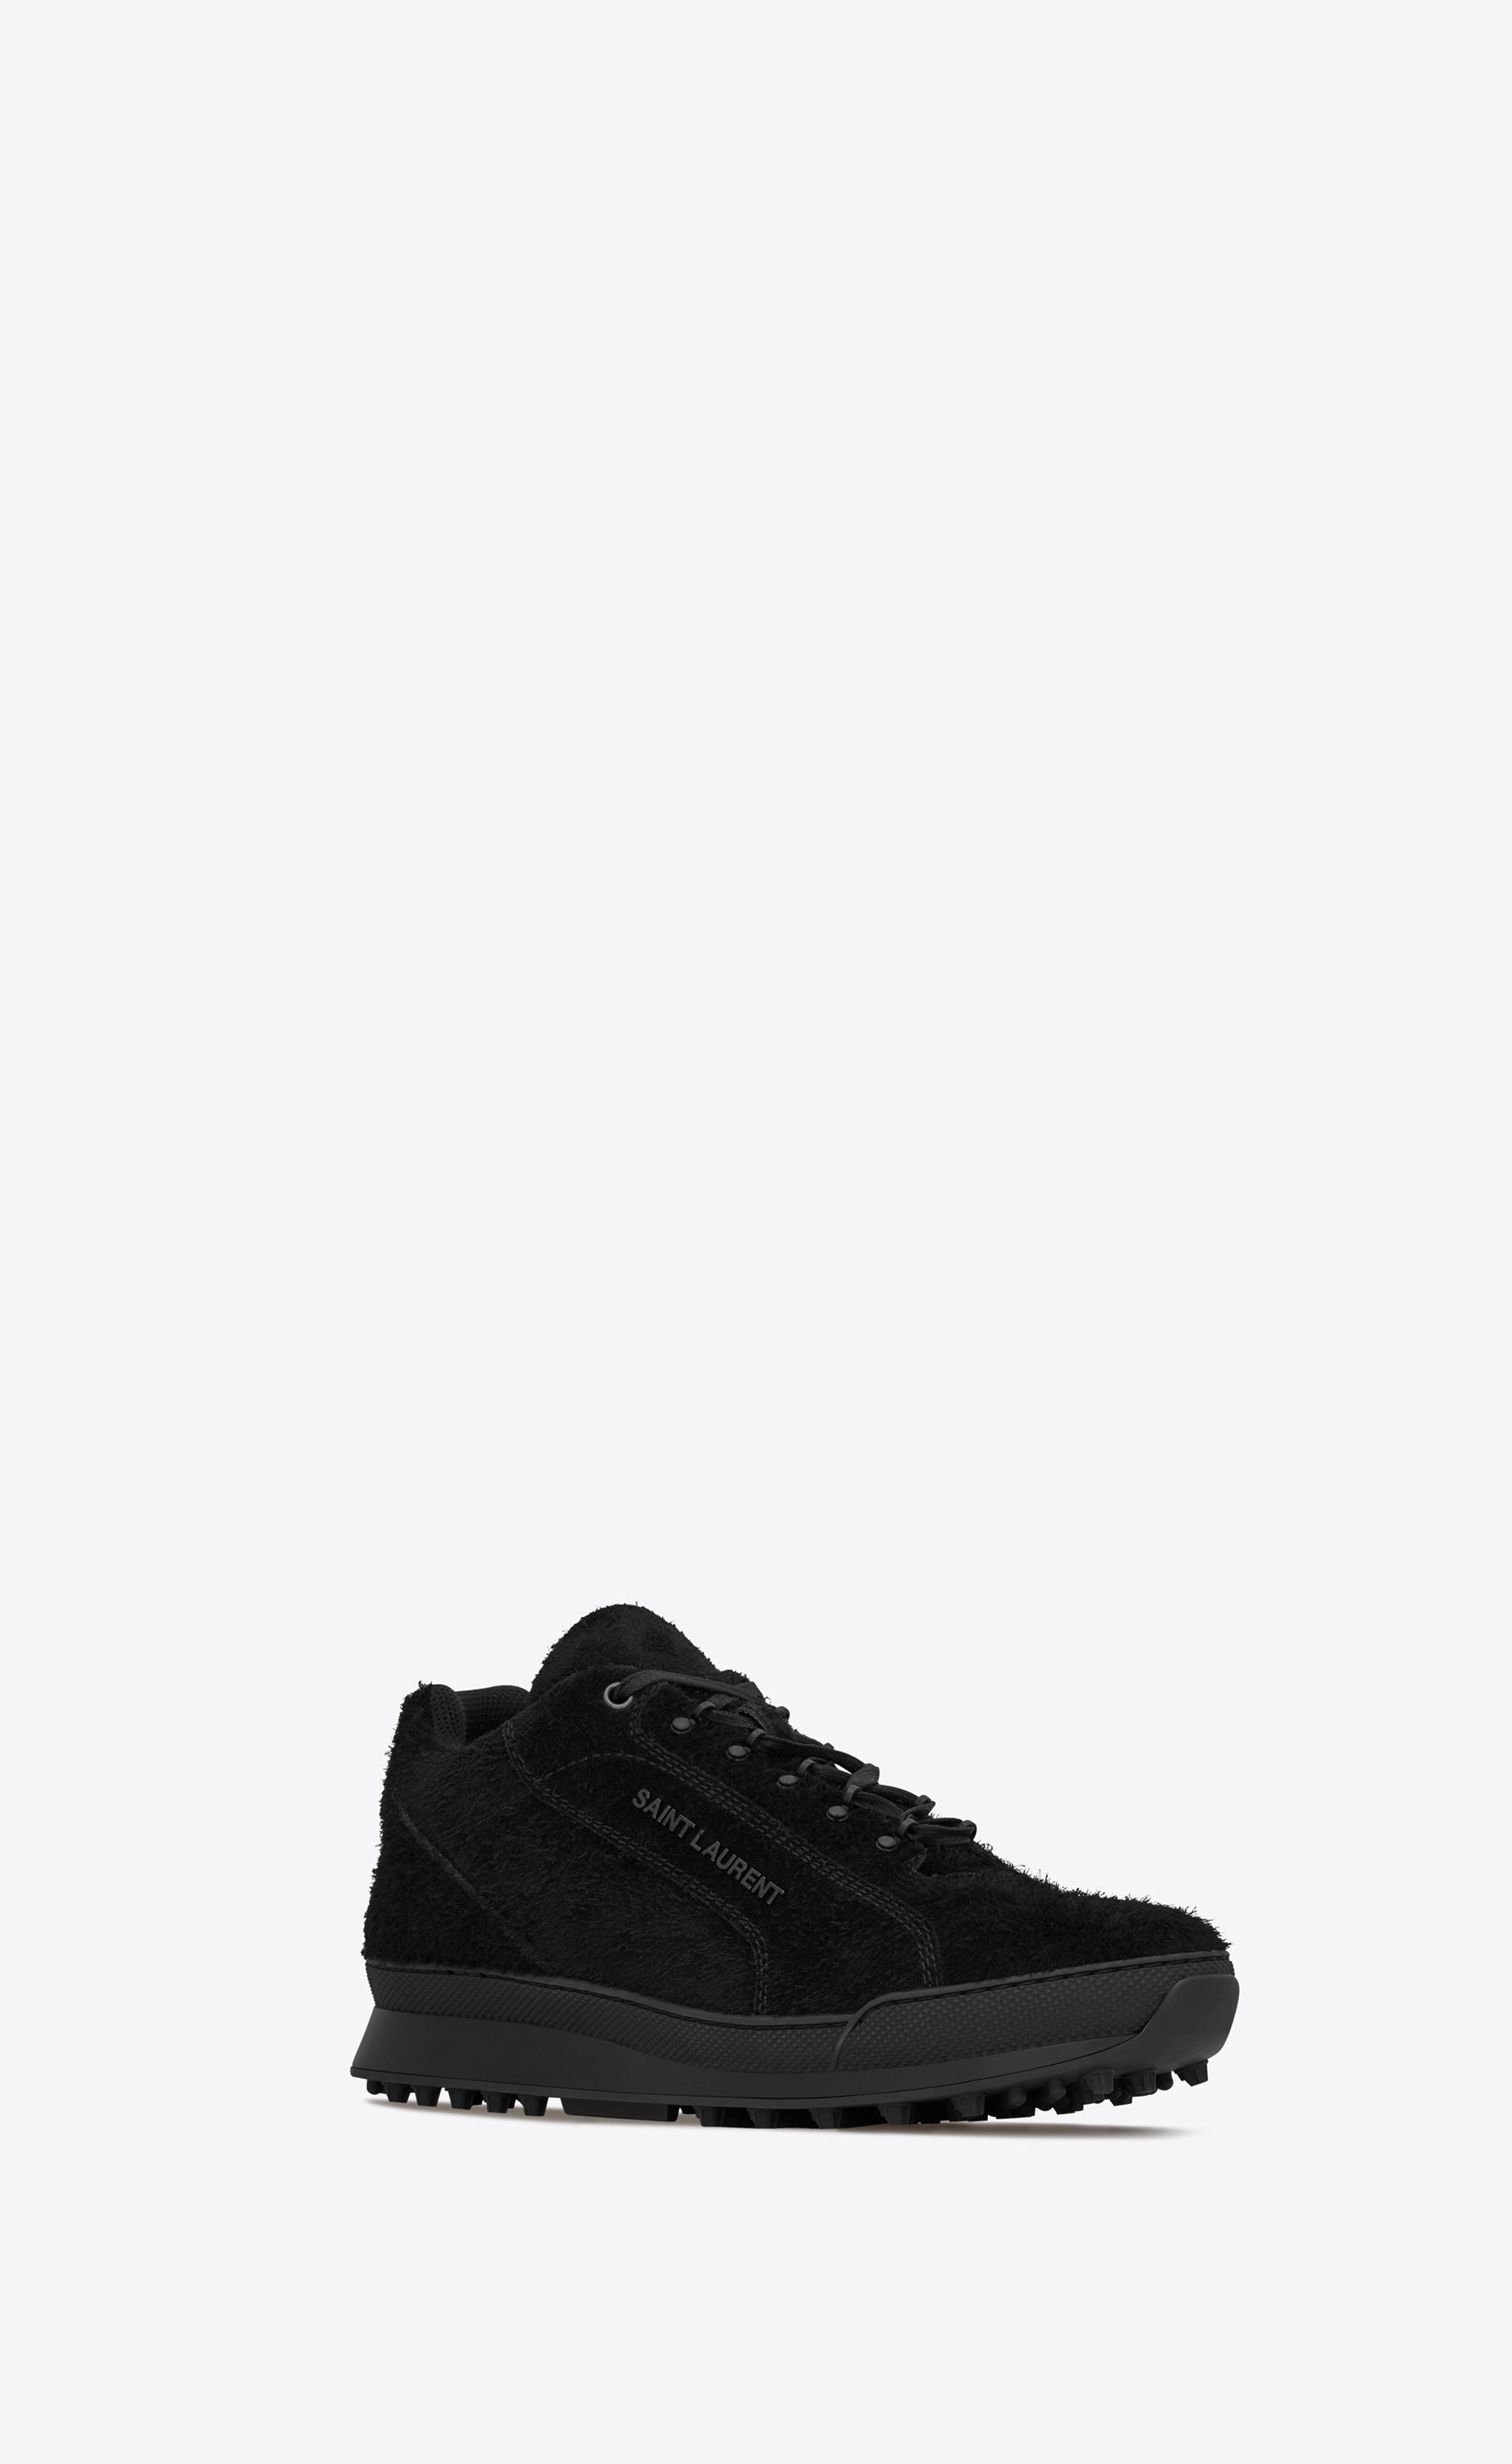 Saint Laurent Jump Sneakers In Suede in Black for Men - Lyst